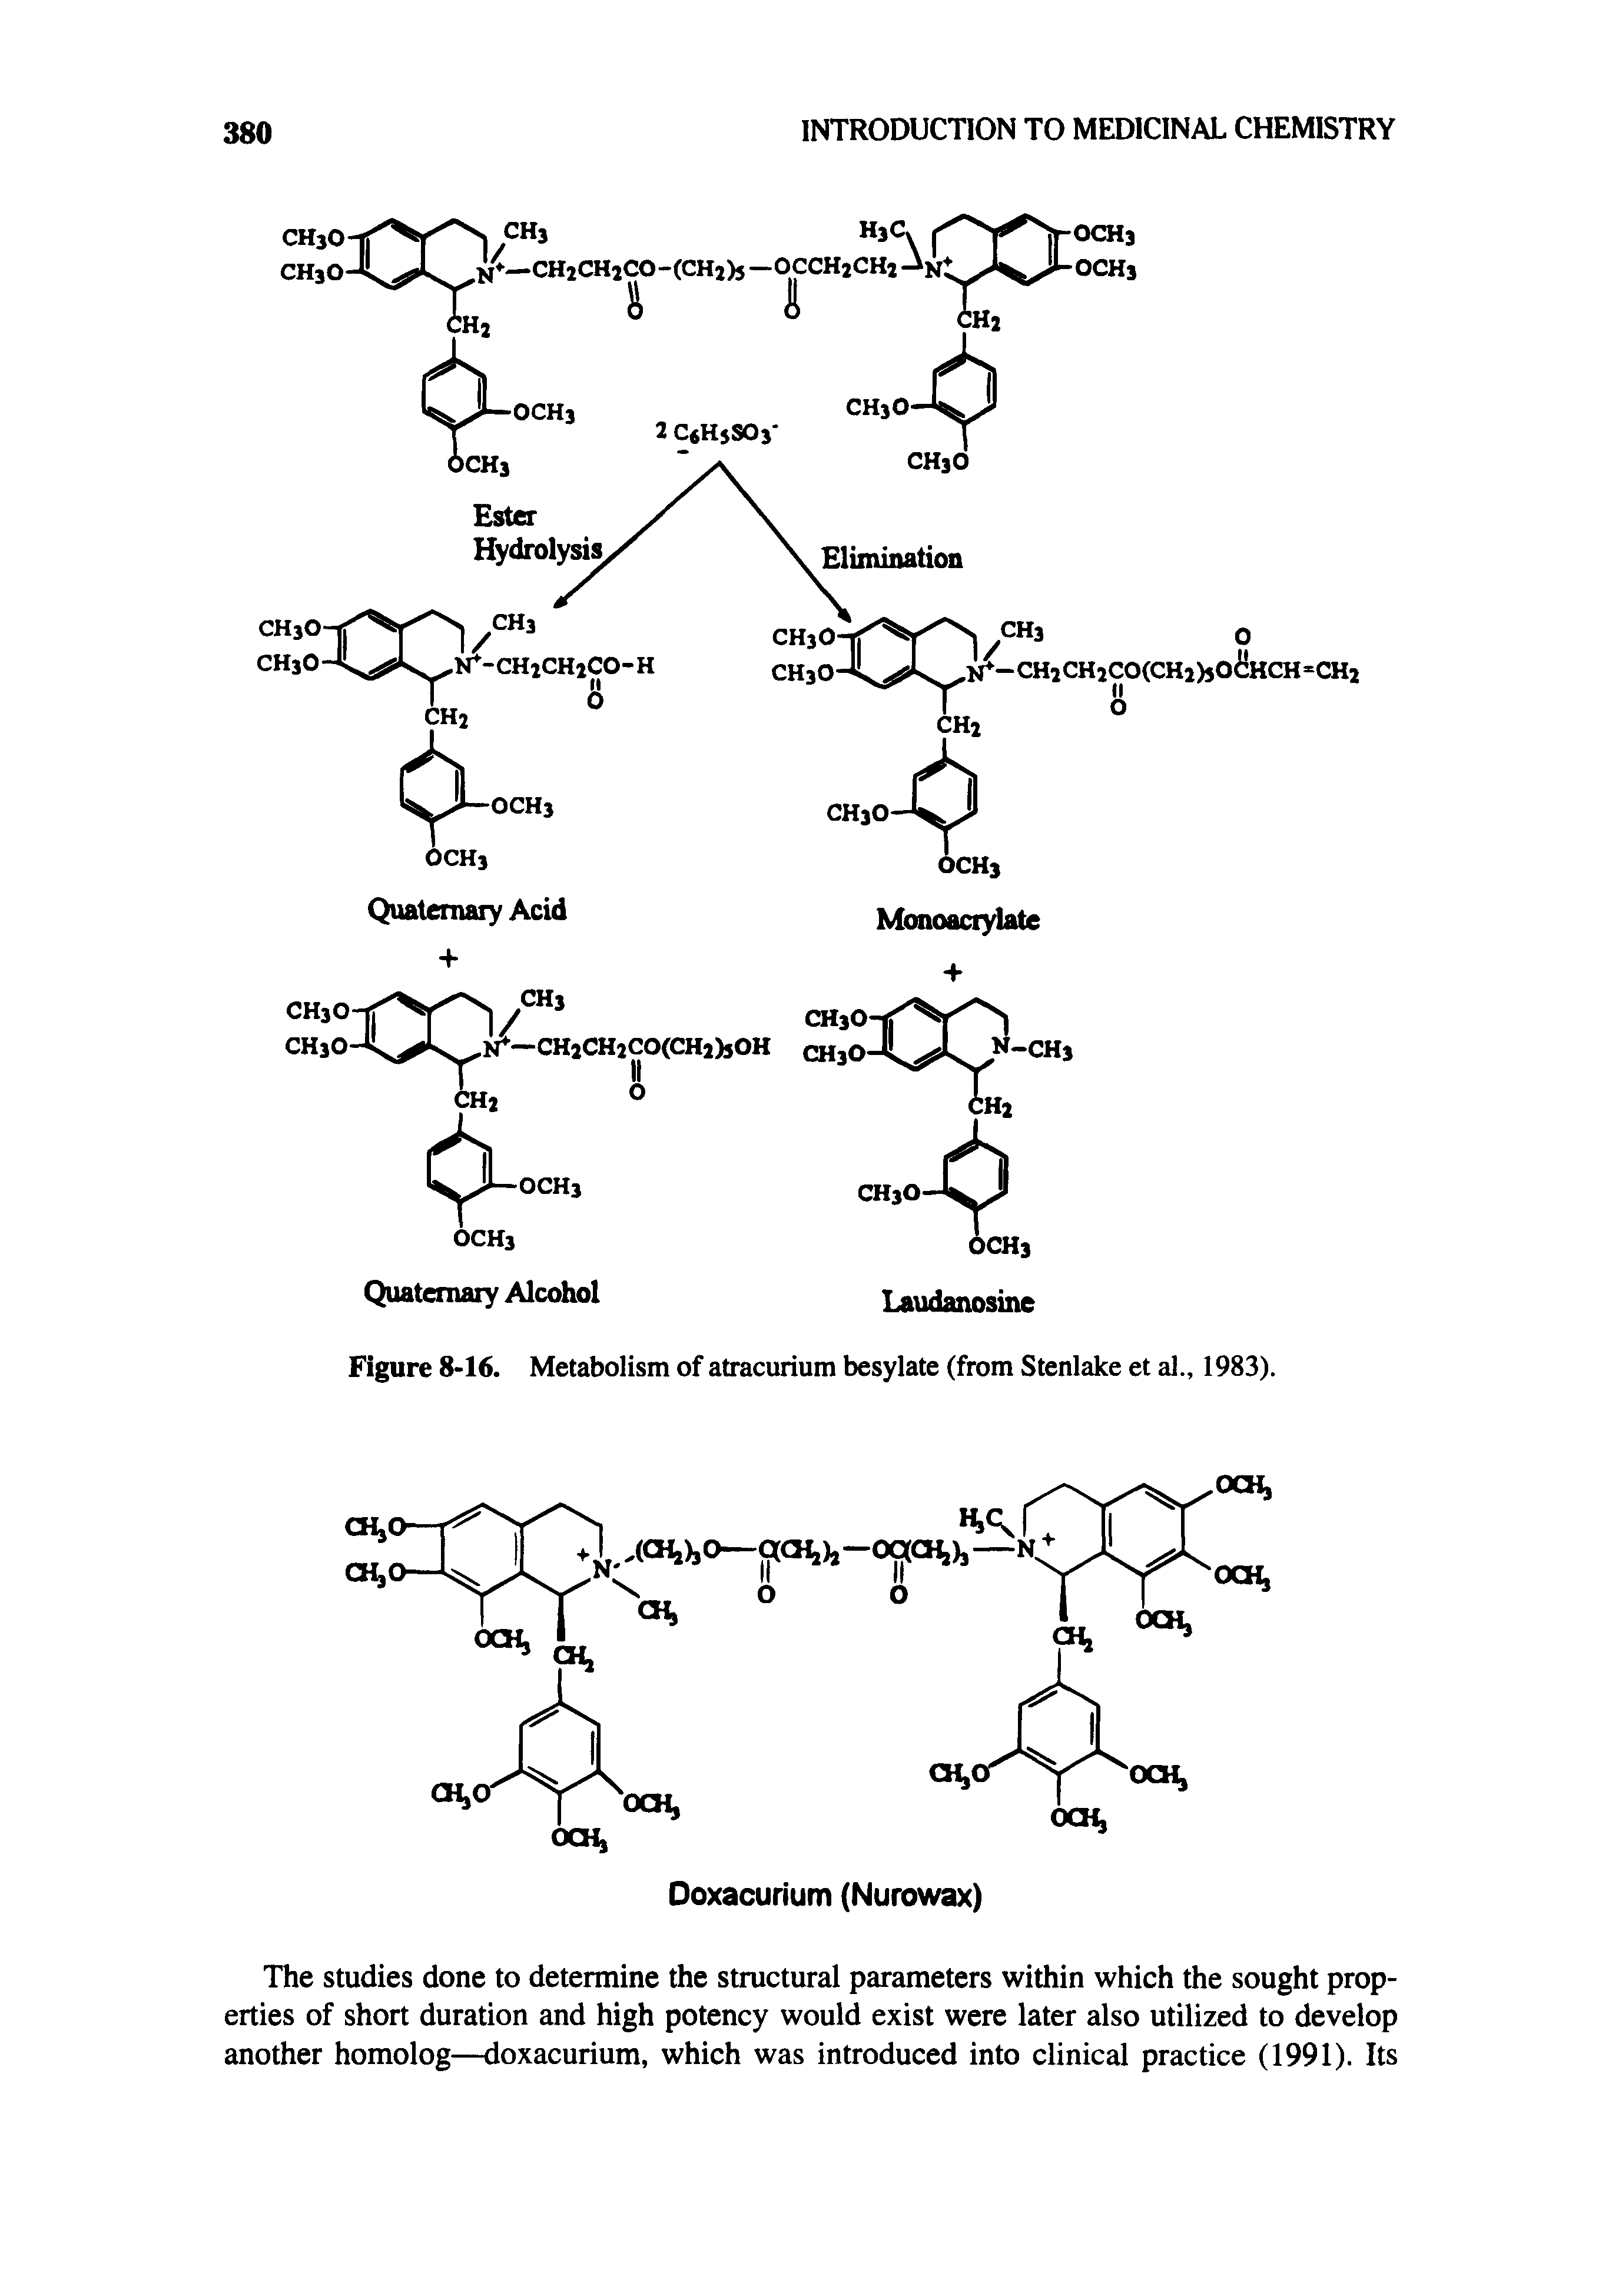 Figure 8-16. Metabolism of atracurium besylate (from Stenlake et al., 1983).